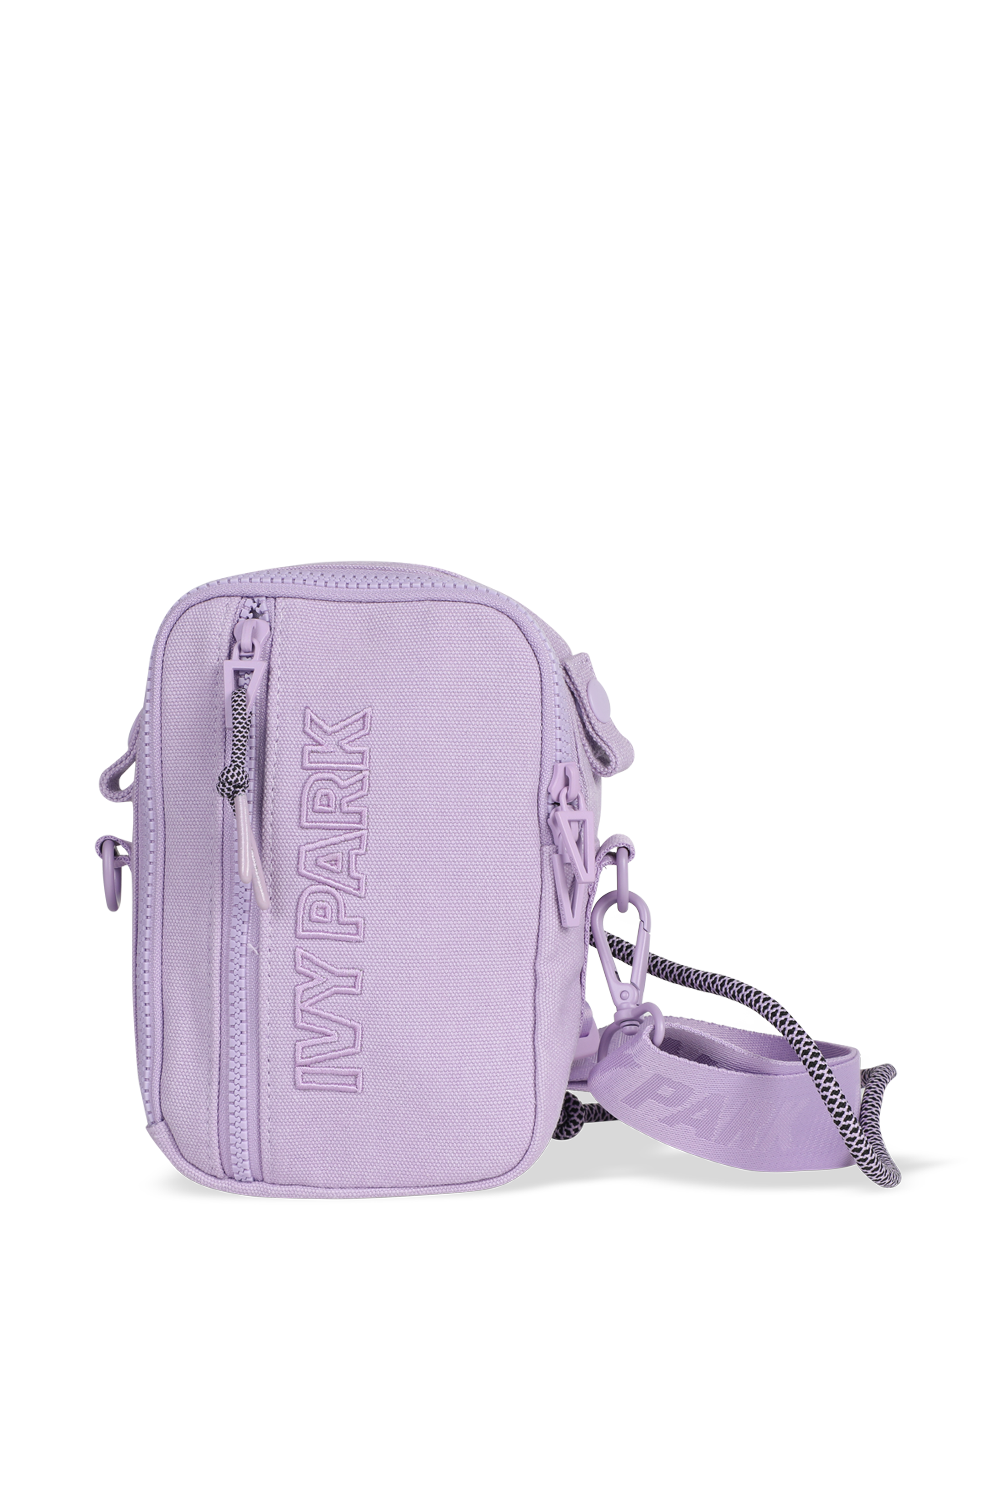 Ivy Park x Adidas Bag in Purple ADIDAS ORIGINALS